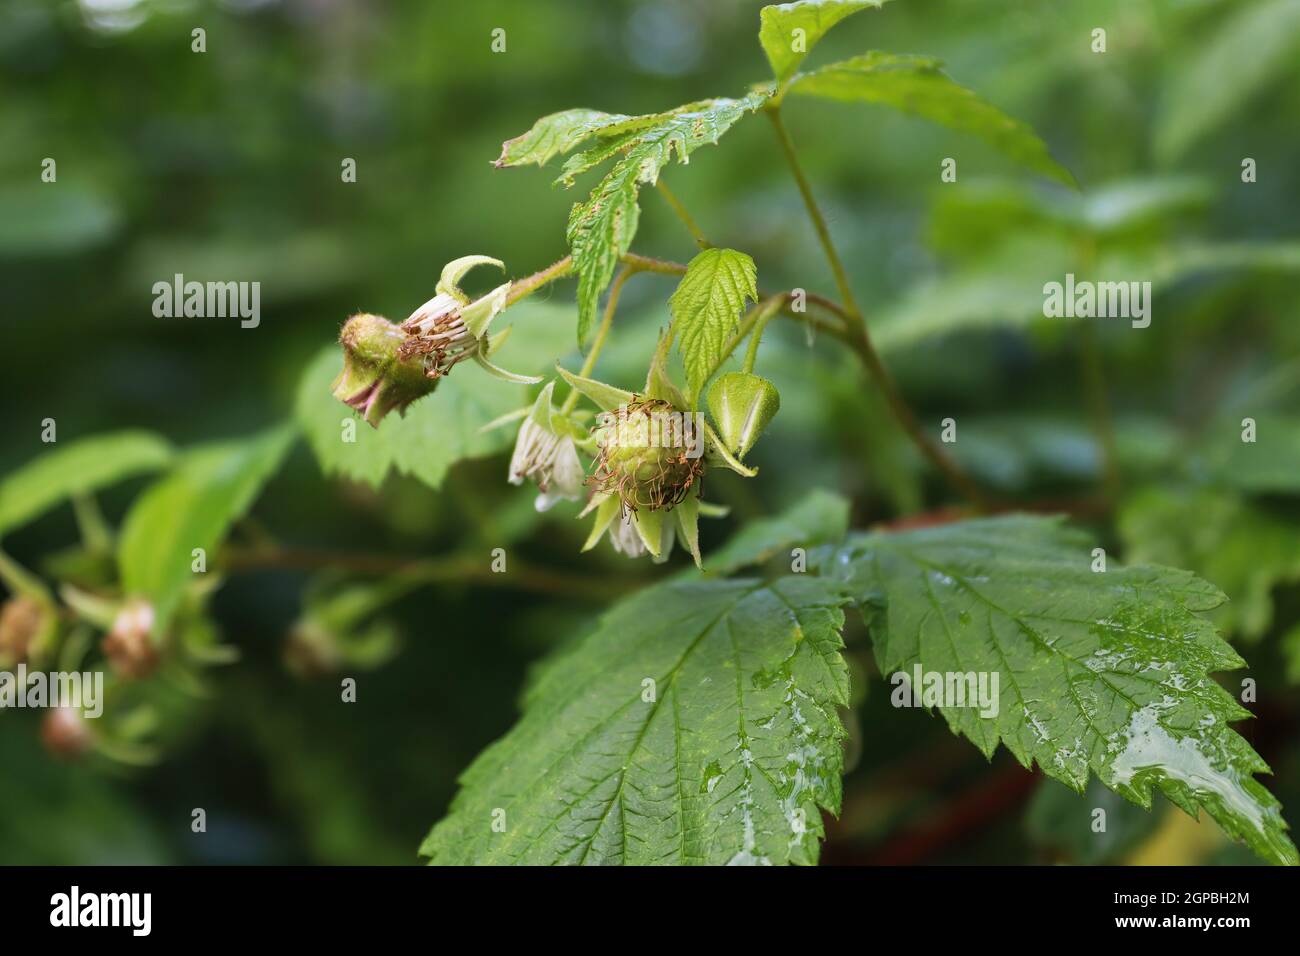 https://c8.alamy.com/comp/2GPBH2M/wild-immature-green-raspberry-fruit-forming-on-plants-2GPBH2M.jpg